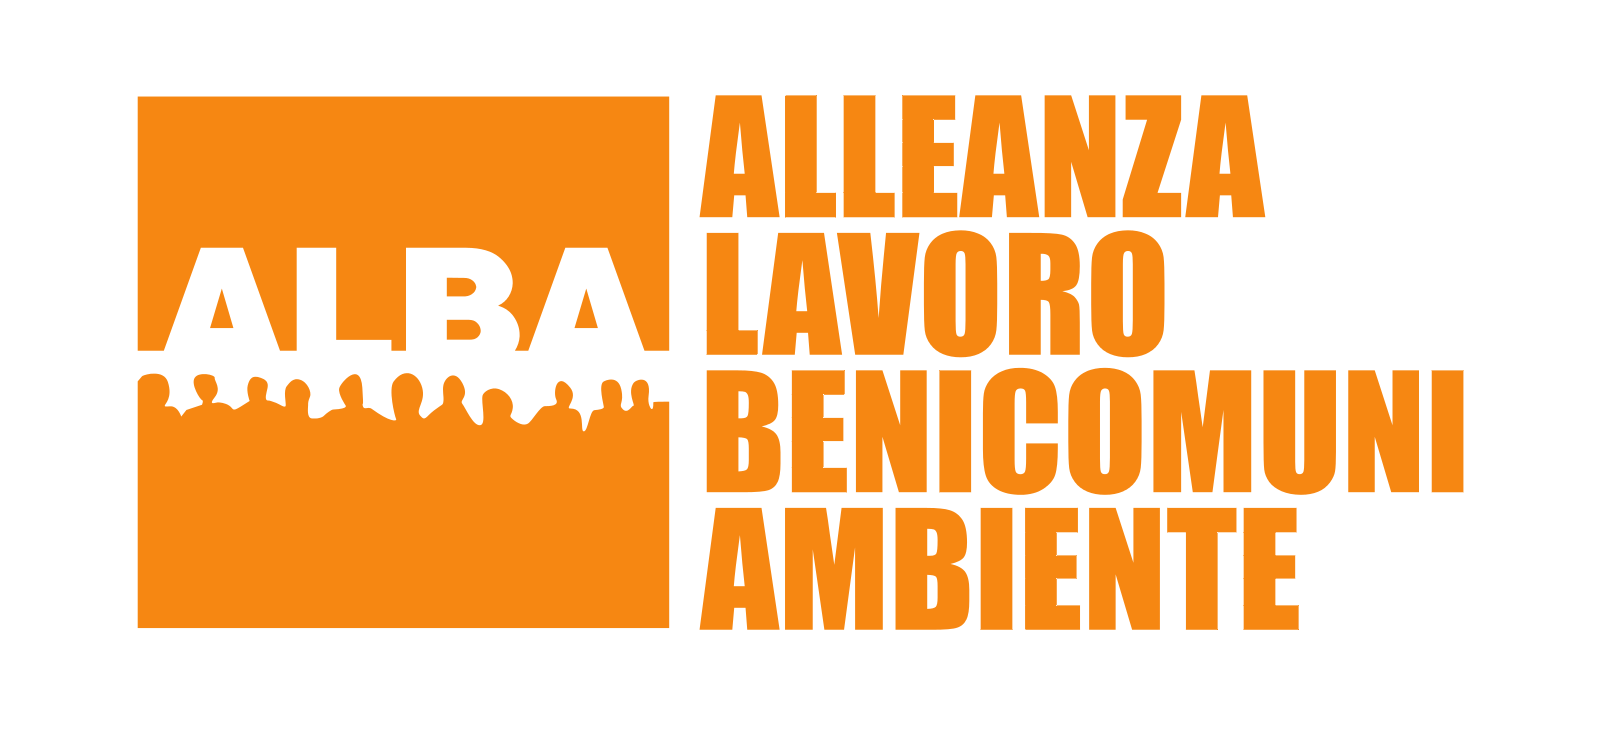 ALBA-logo